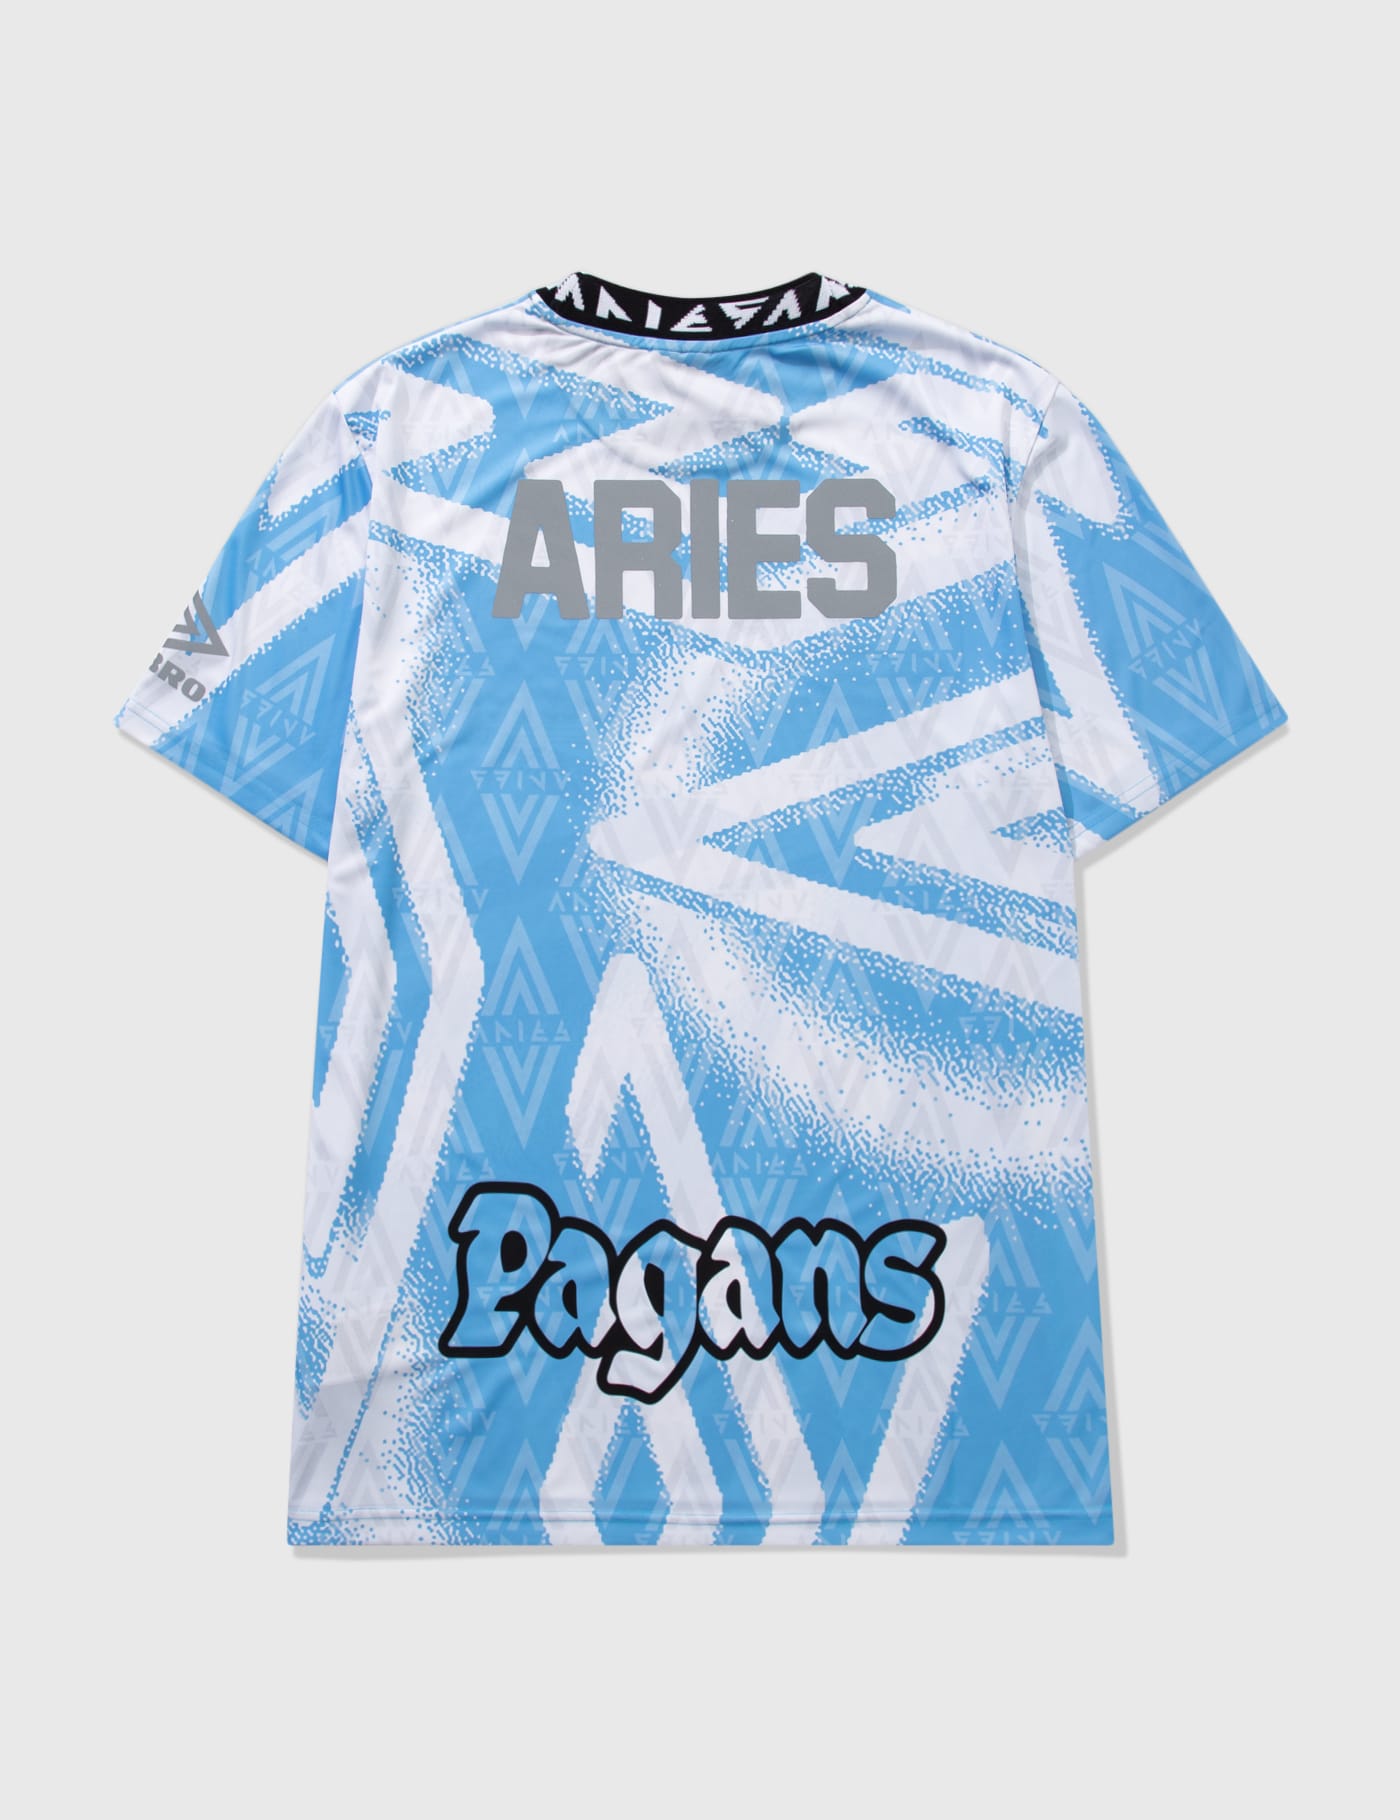 Aries - Aries x Umbro Football Jersey | HBX - HYPEBEAST 為您搜羅全球潮流時尚品牌